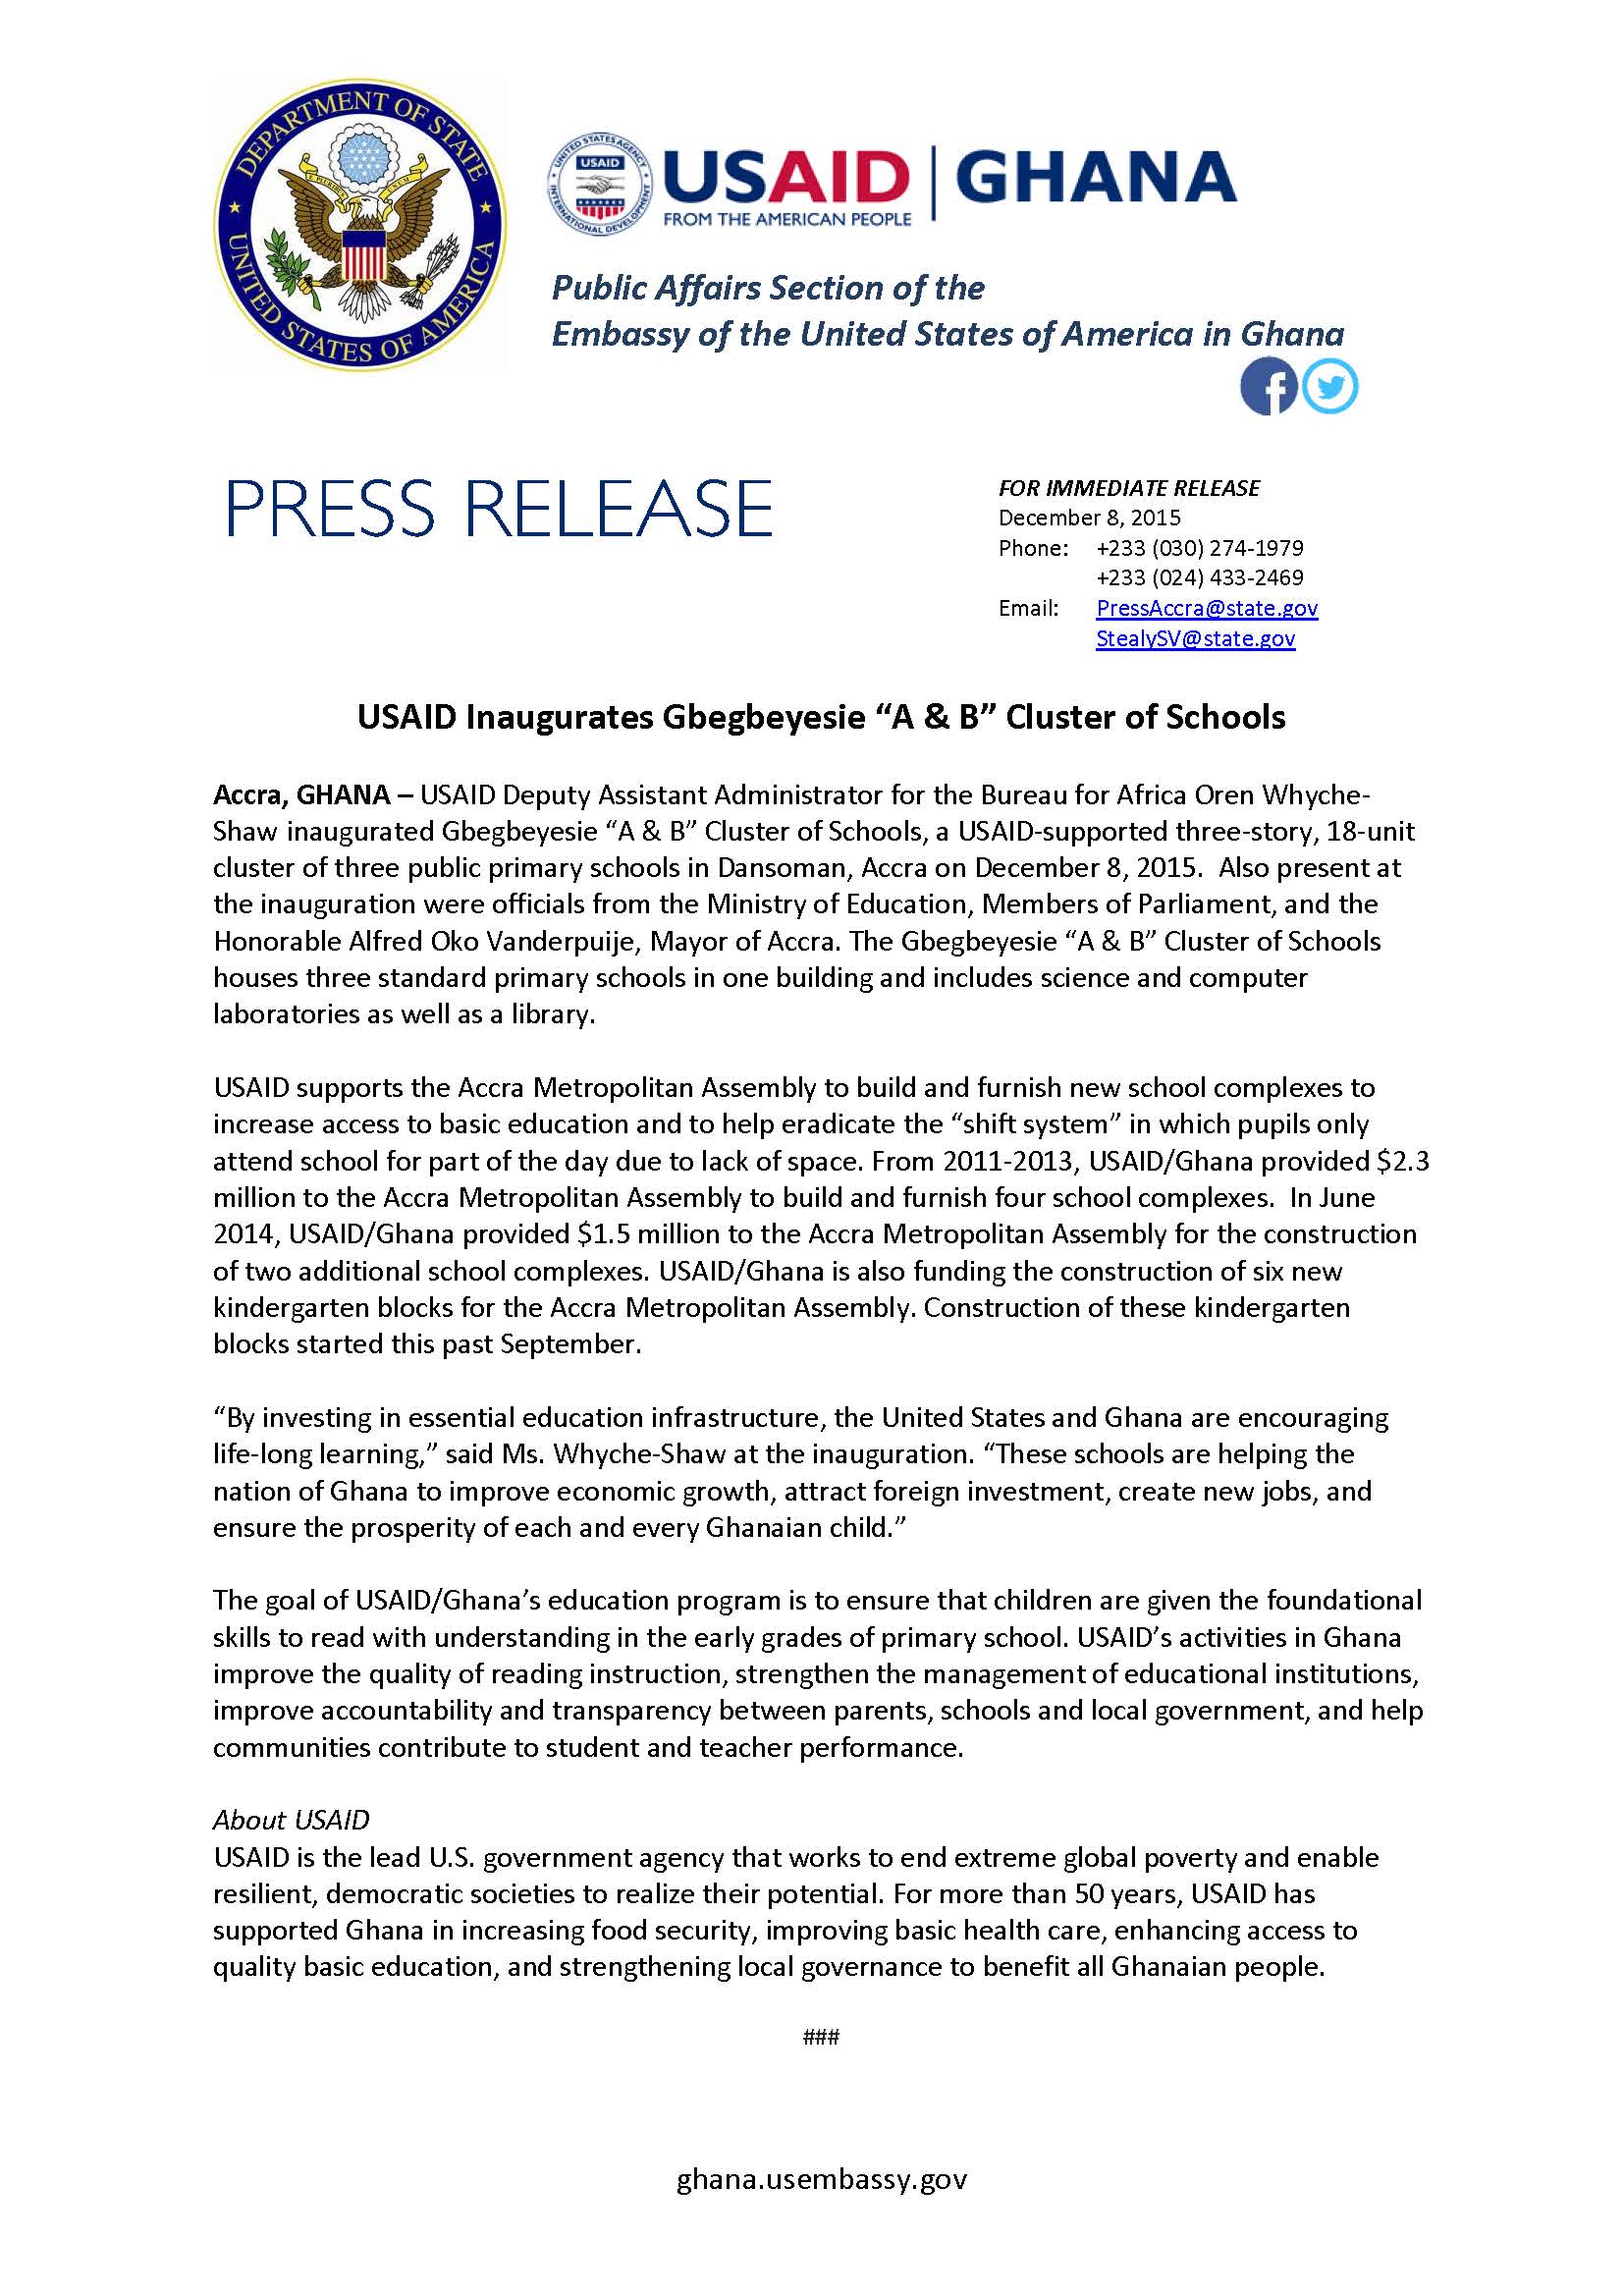 Press Release: USAID Inaugurates Gbegbeyesie “A & B” Cluster of Schools